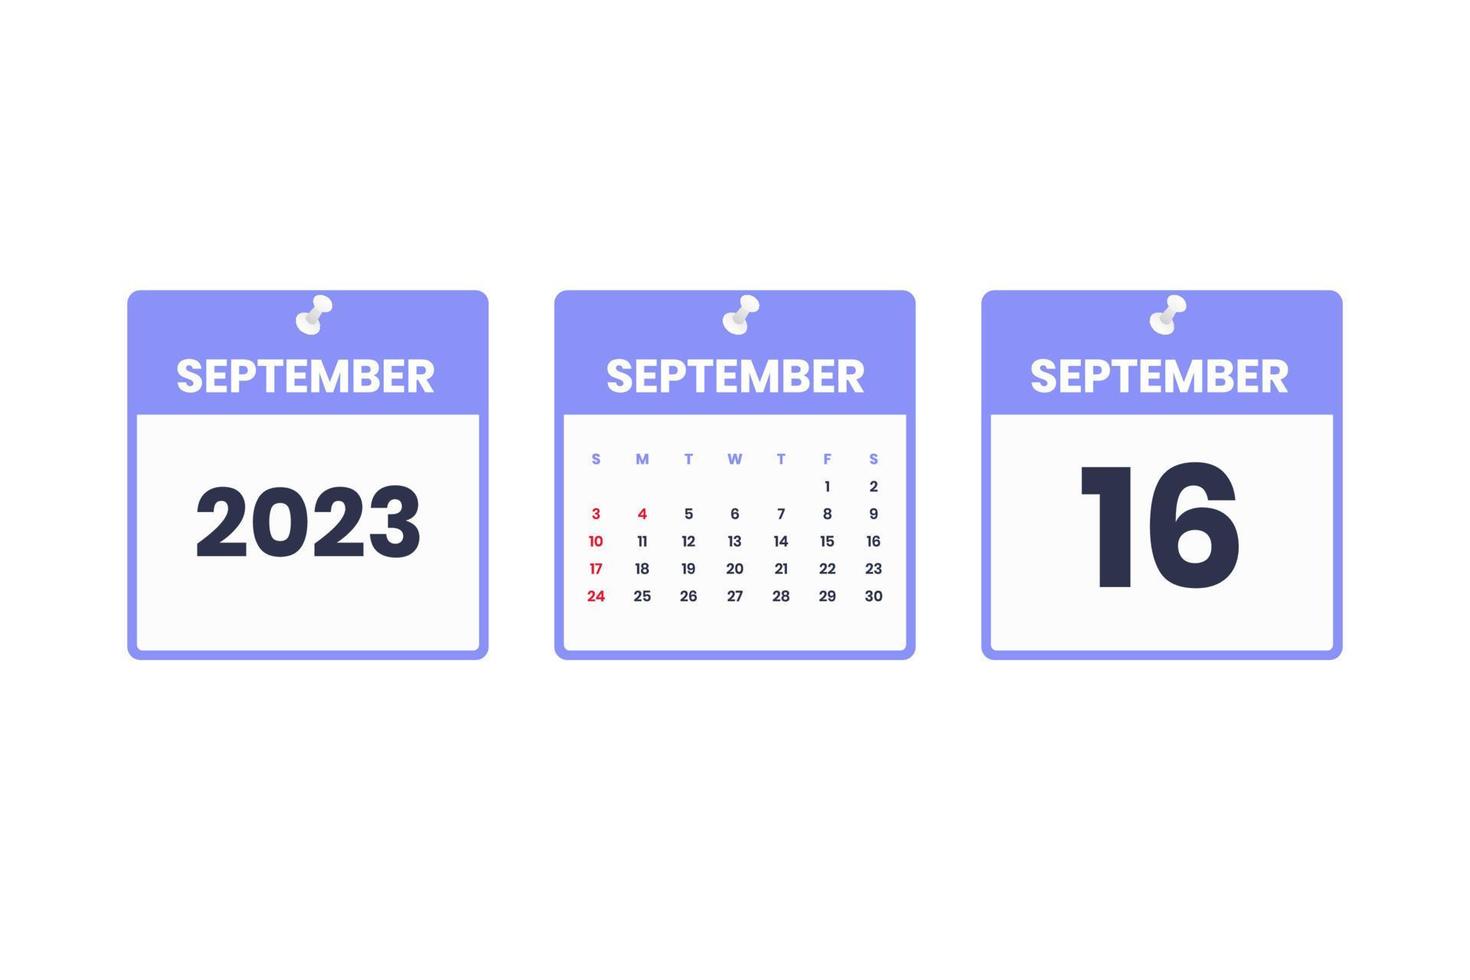 September calendar design. September 16 2023 calendar icon for schedule, appointment, important date concept vector